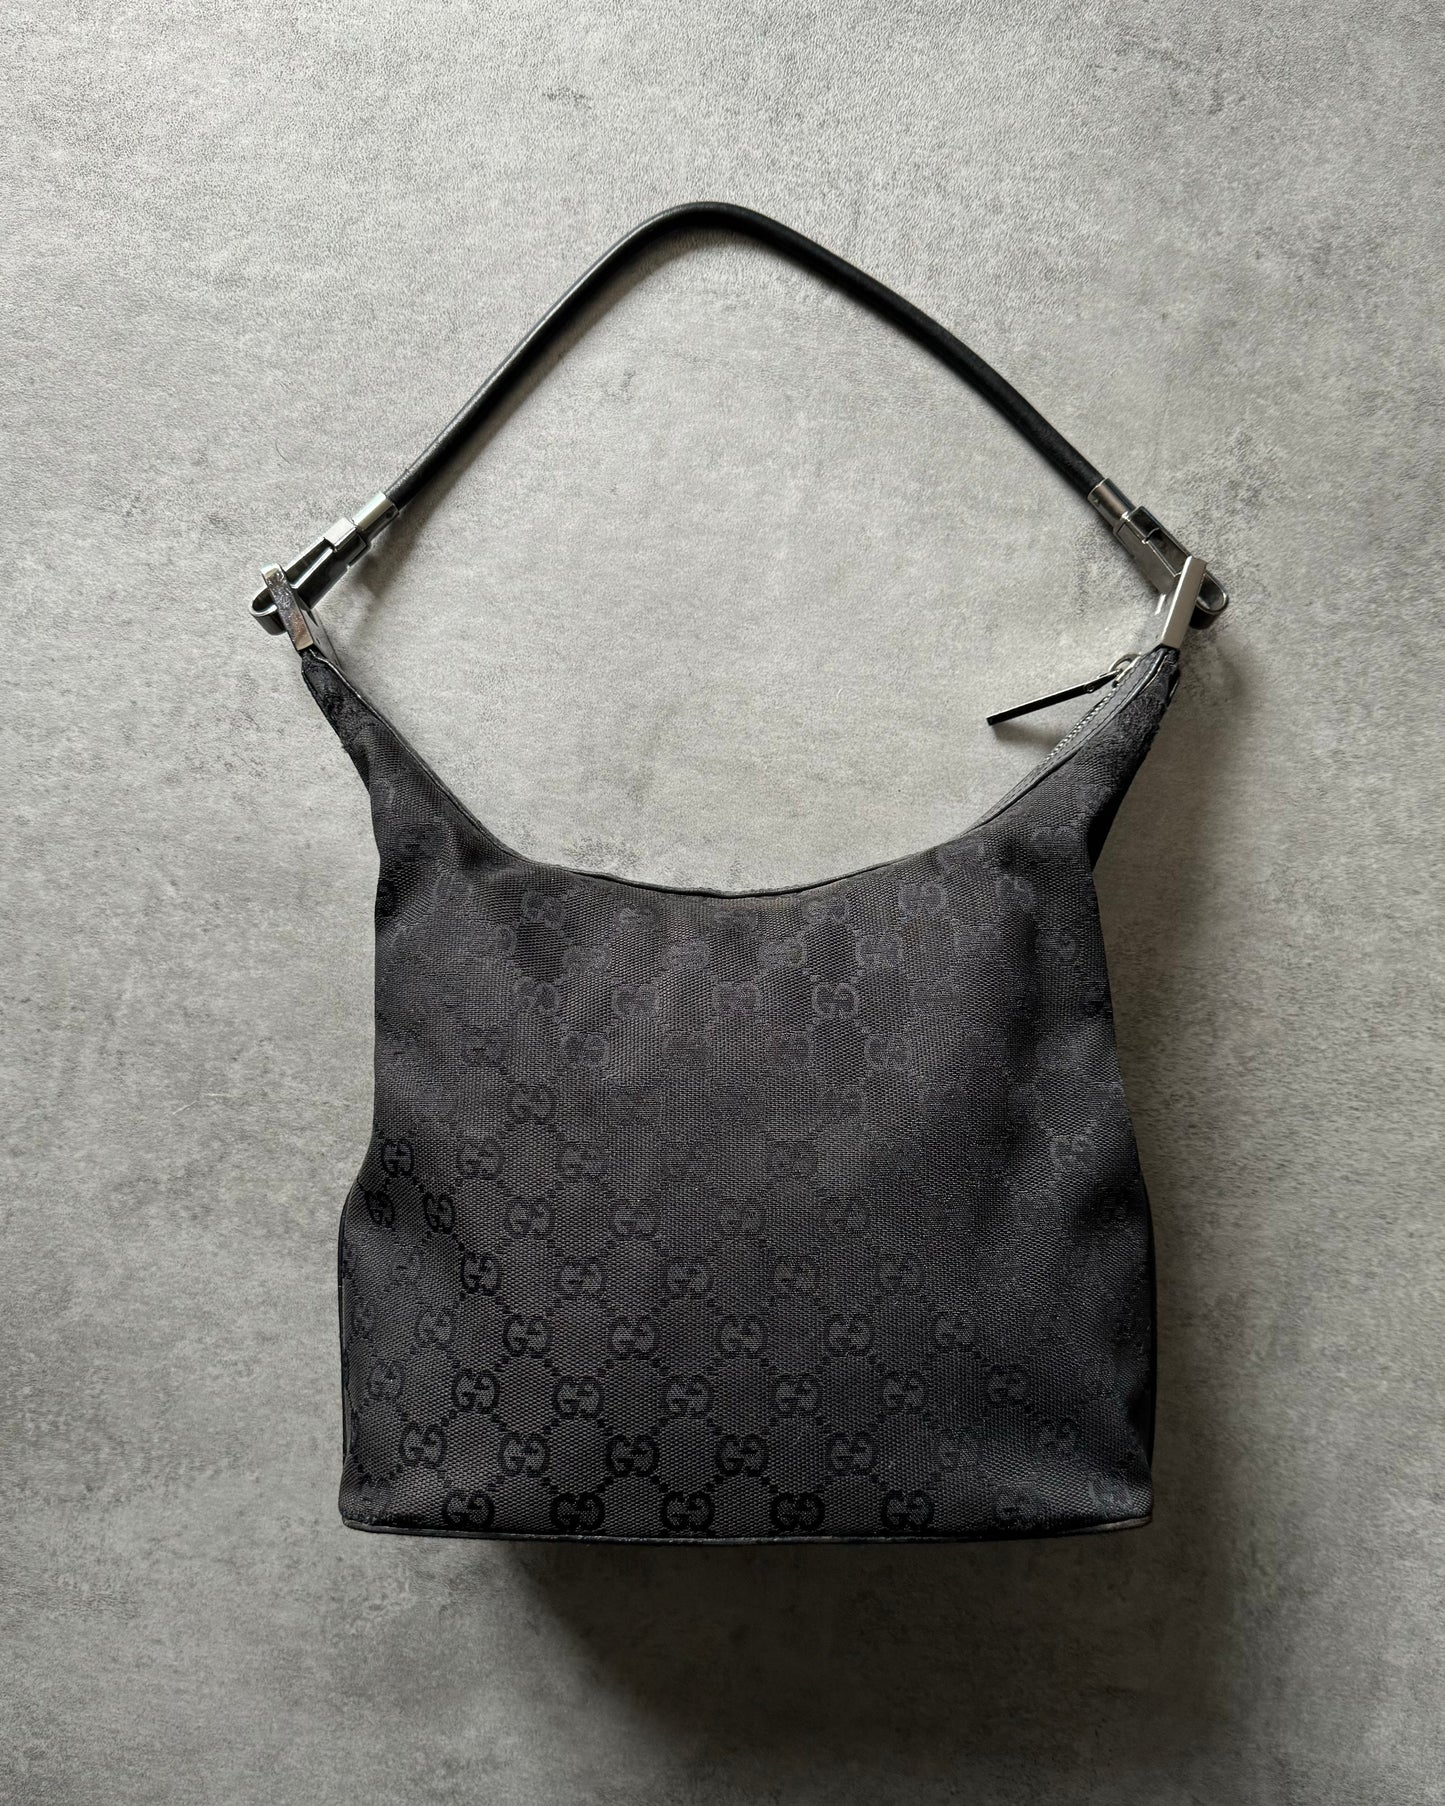 FW2002 Gucci Black Monogrammed Black Bag by Tom Ford (OS) - 2